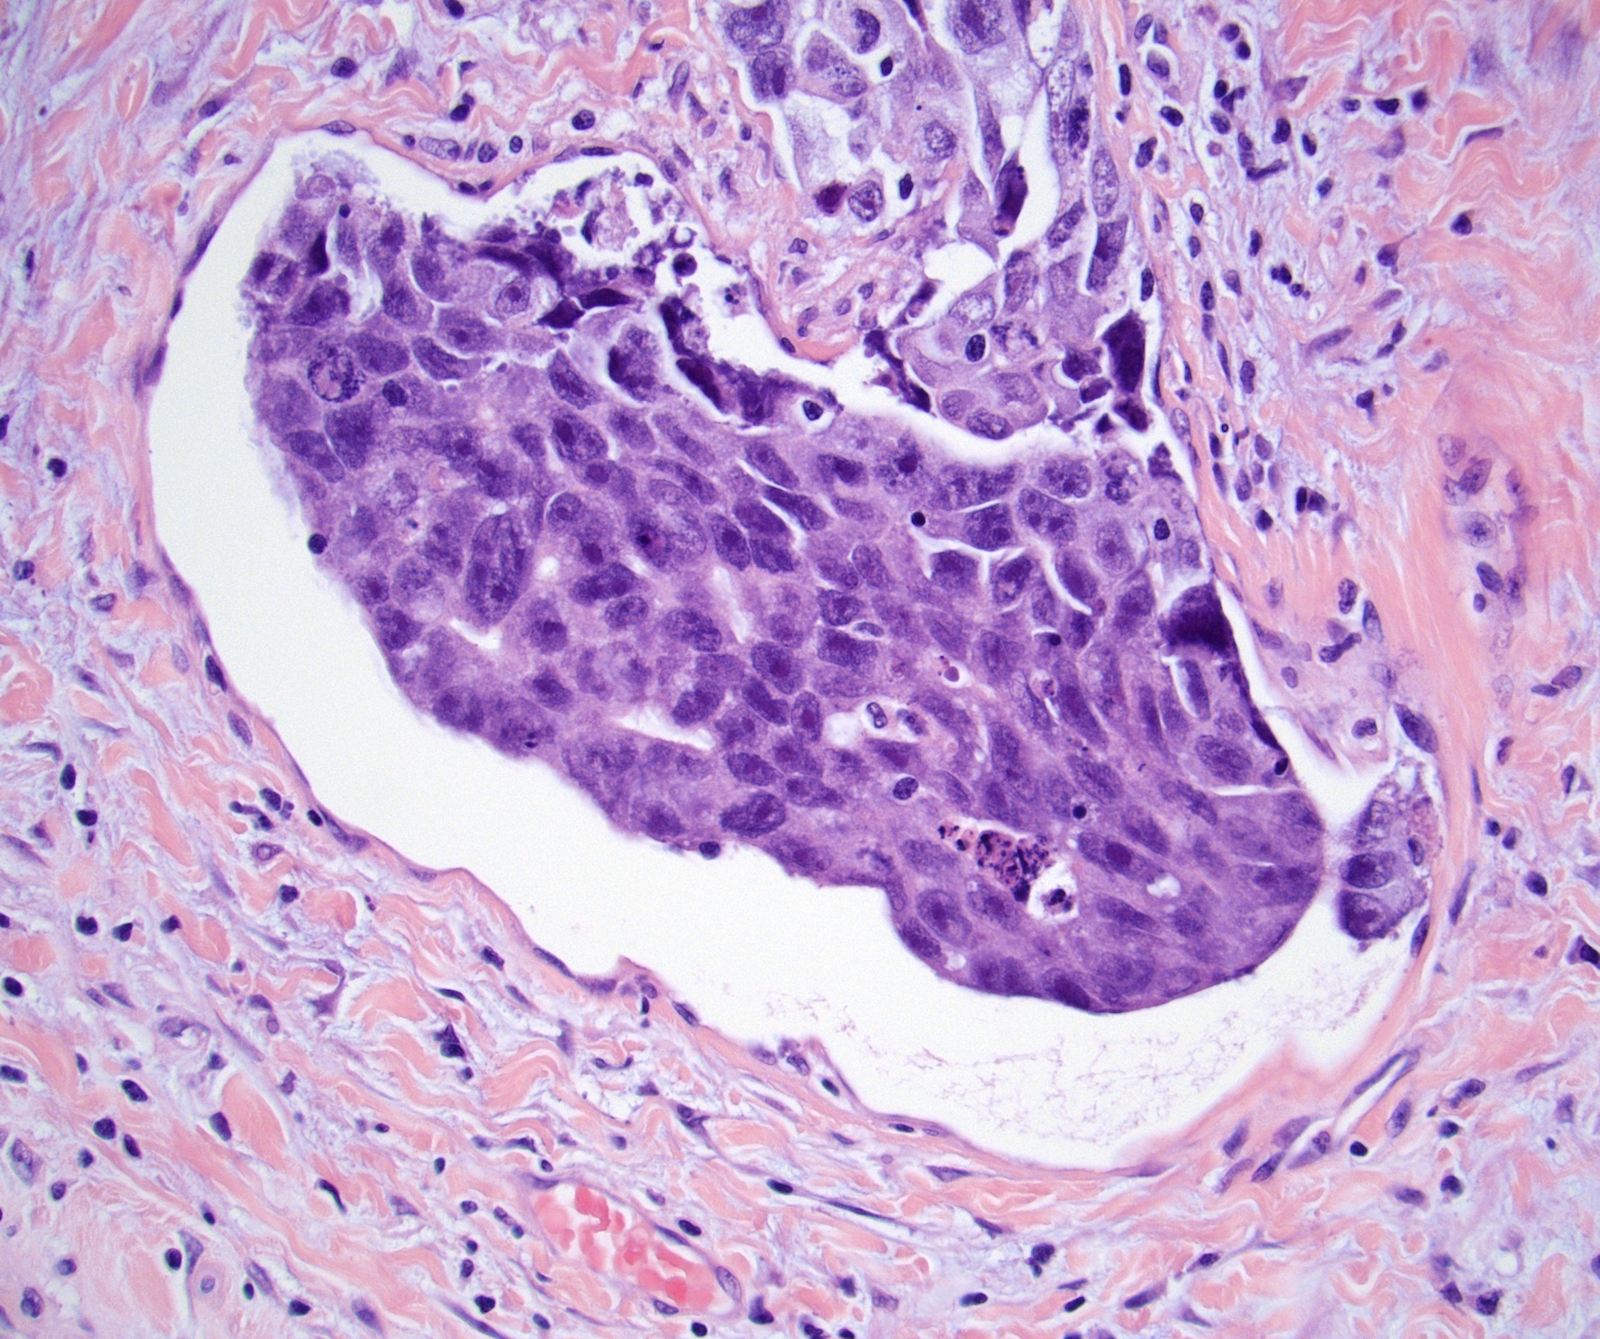 Pathology Outlines Pathologic Tnm Staging Of Testis Germ Cell Tumor